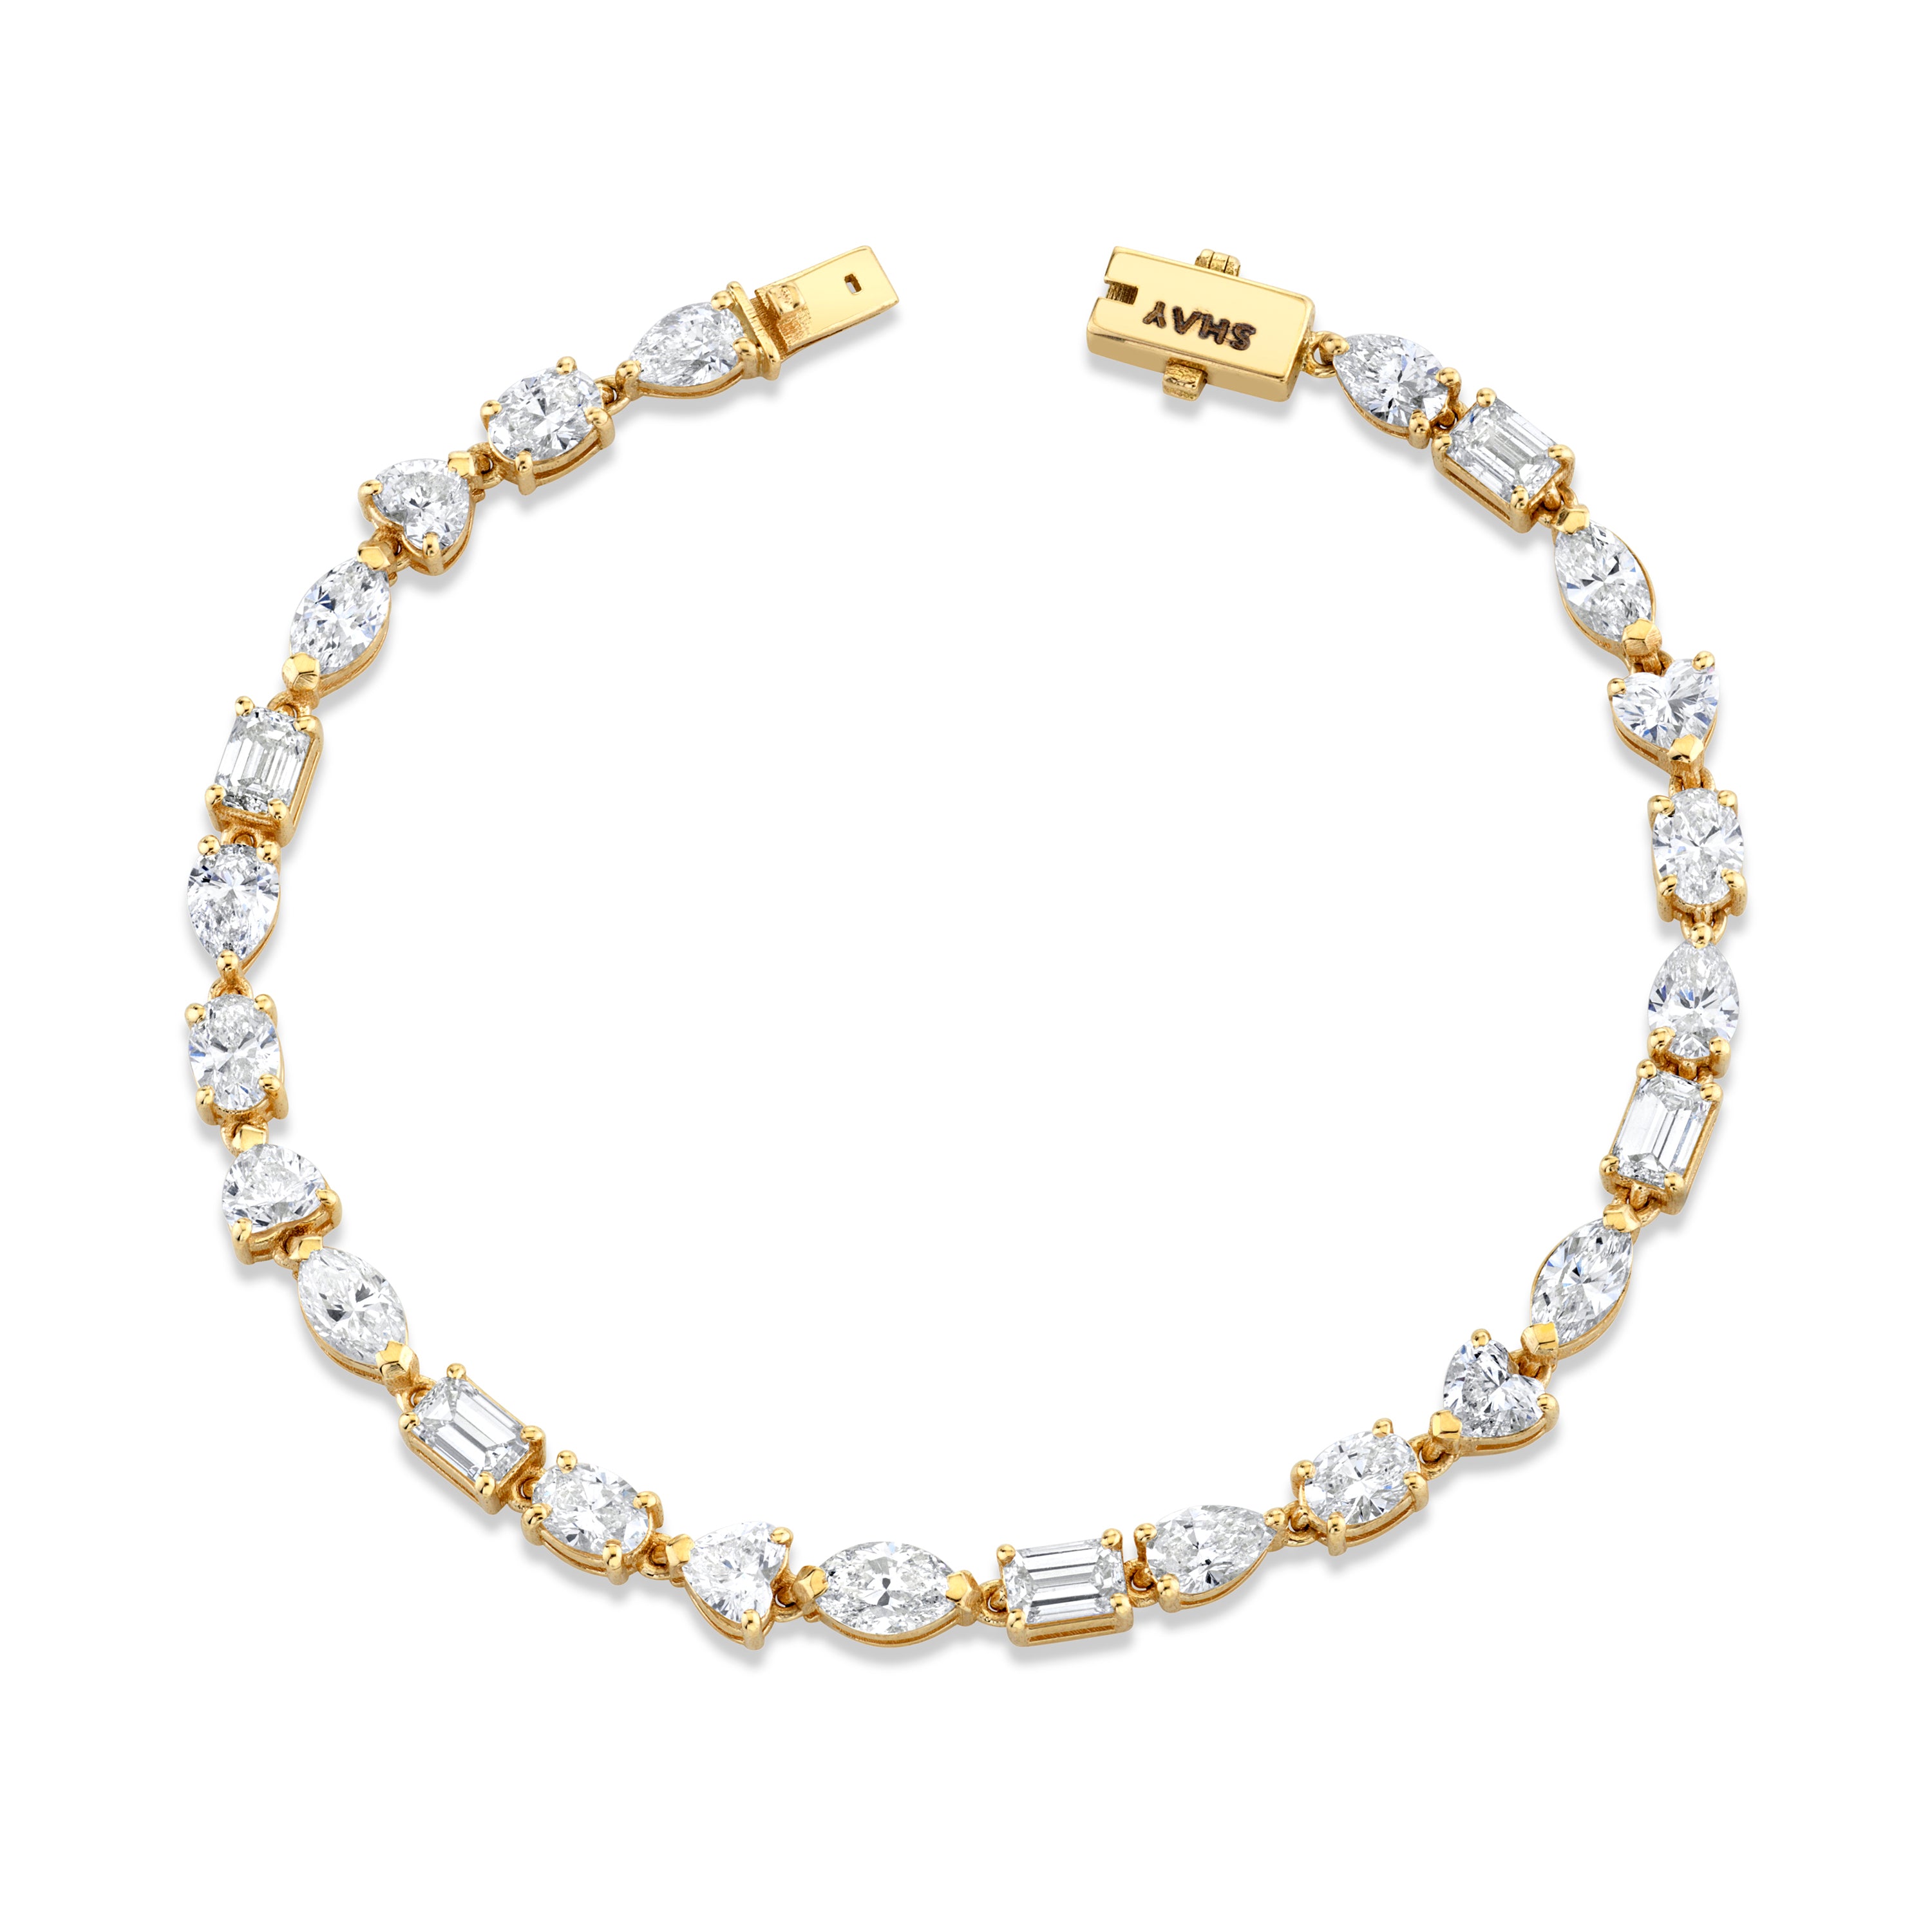 Shay 18kt yellow gold diamond bracelet